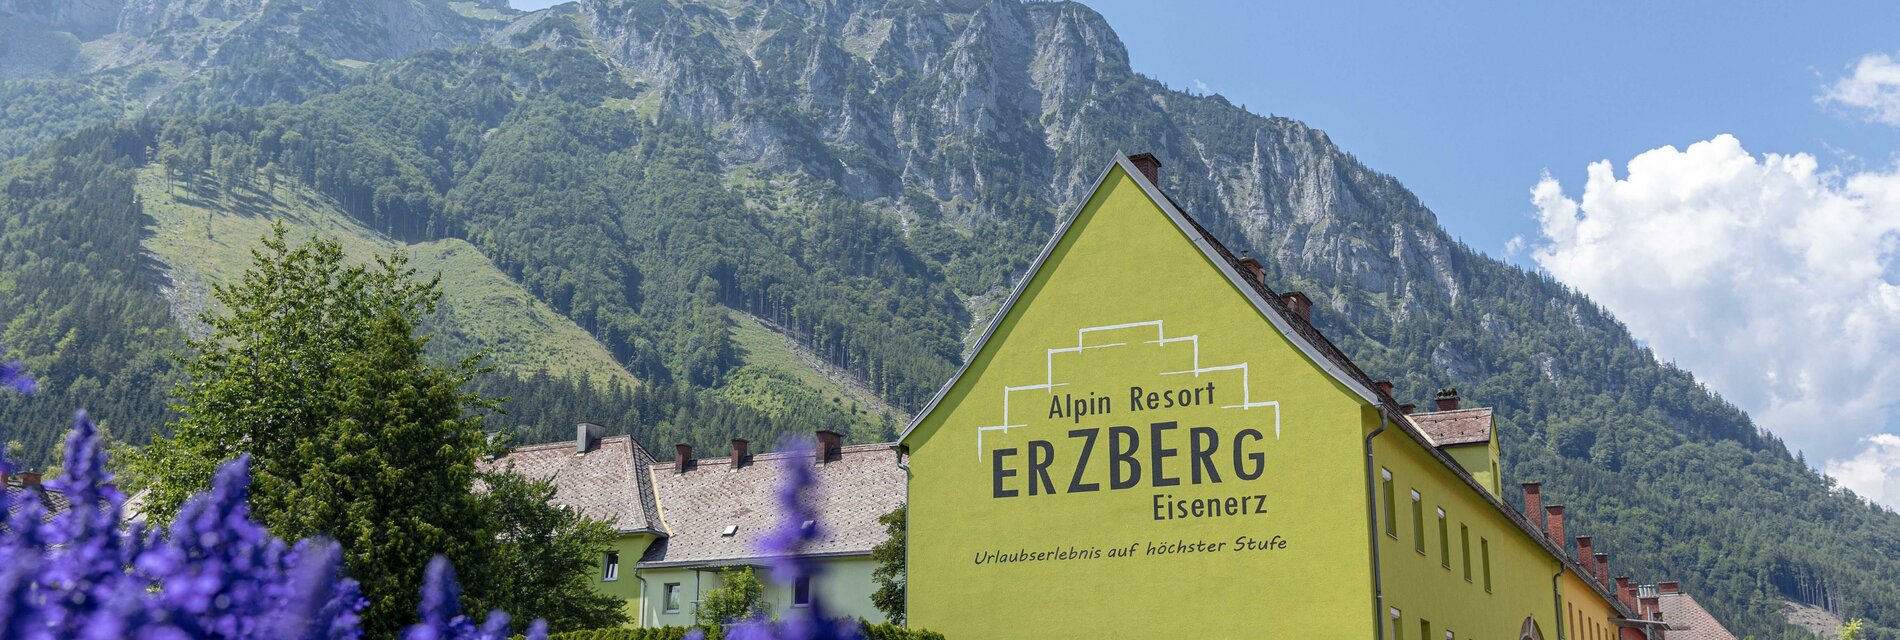 06 Erzberg Alpin Resort (c) Alps Resorts